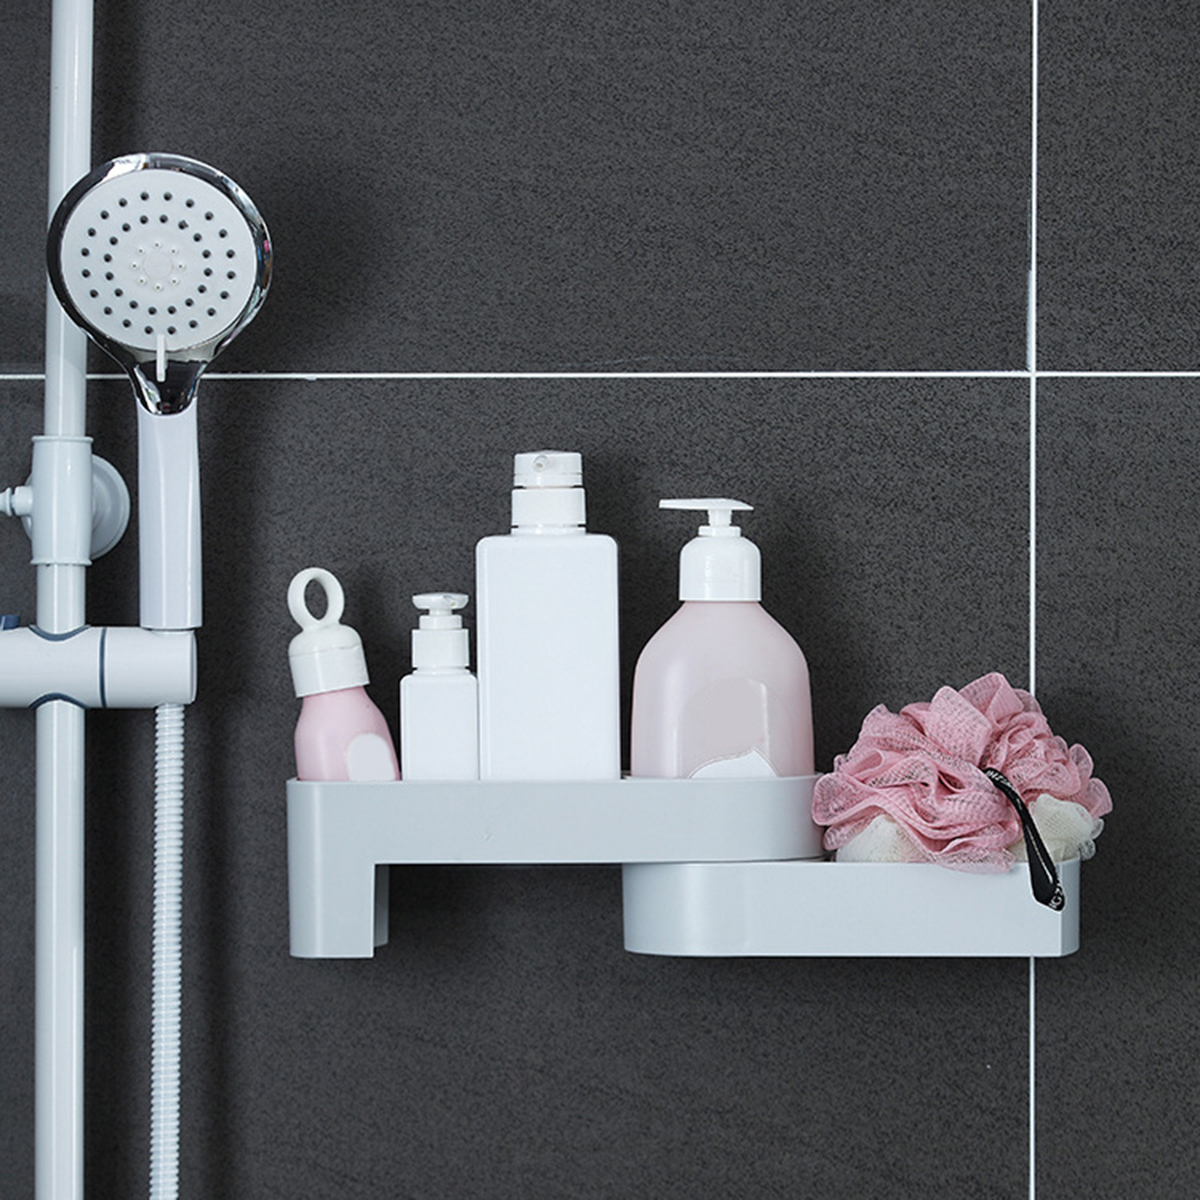 Bakeey-Non-perforated-Rotatable-Bathroom-Organizer-Wall-Mounted-Kitchen-Storage-Shelf-Shower-Shampoo-1659401-7